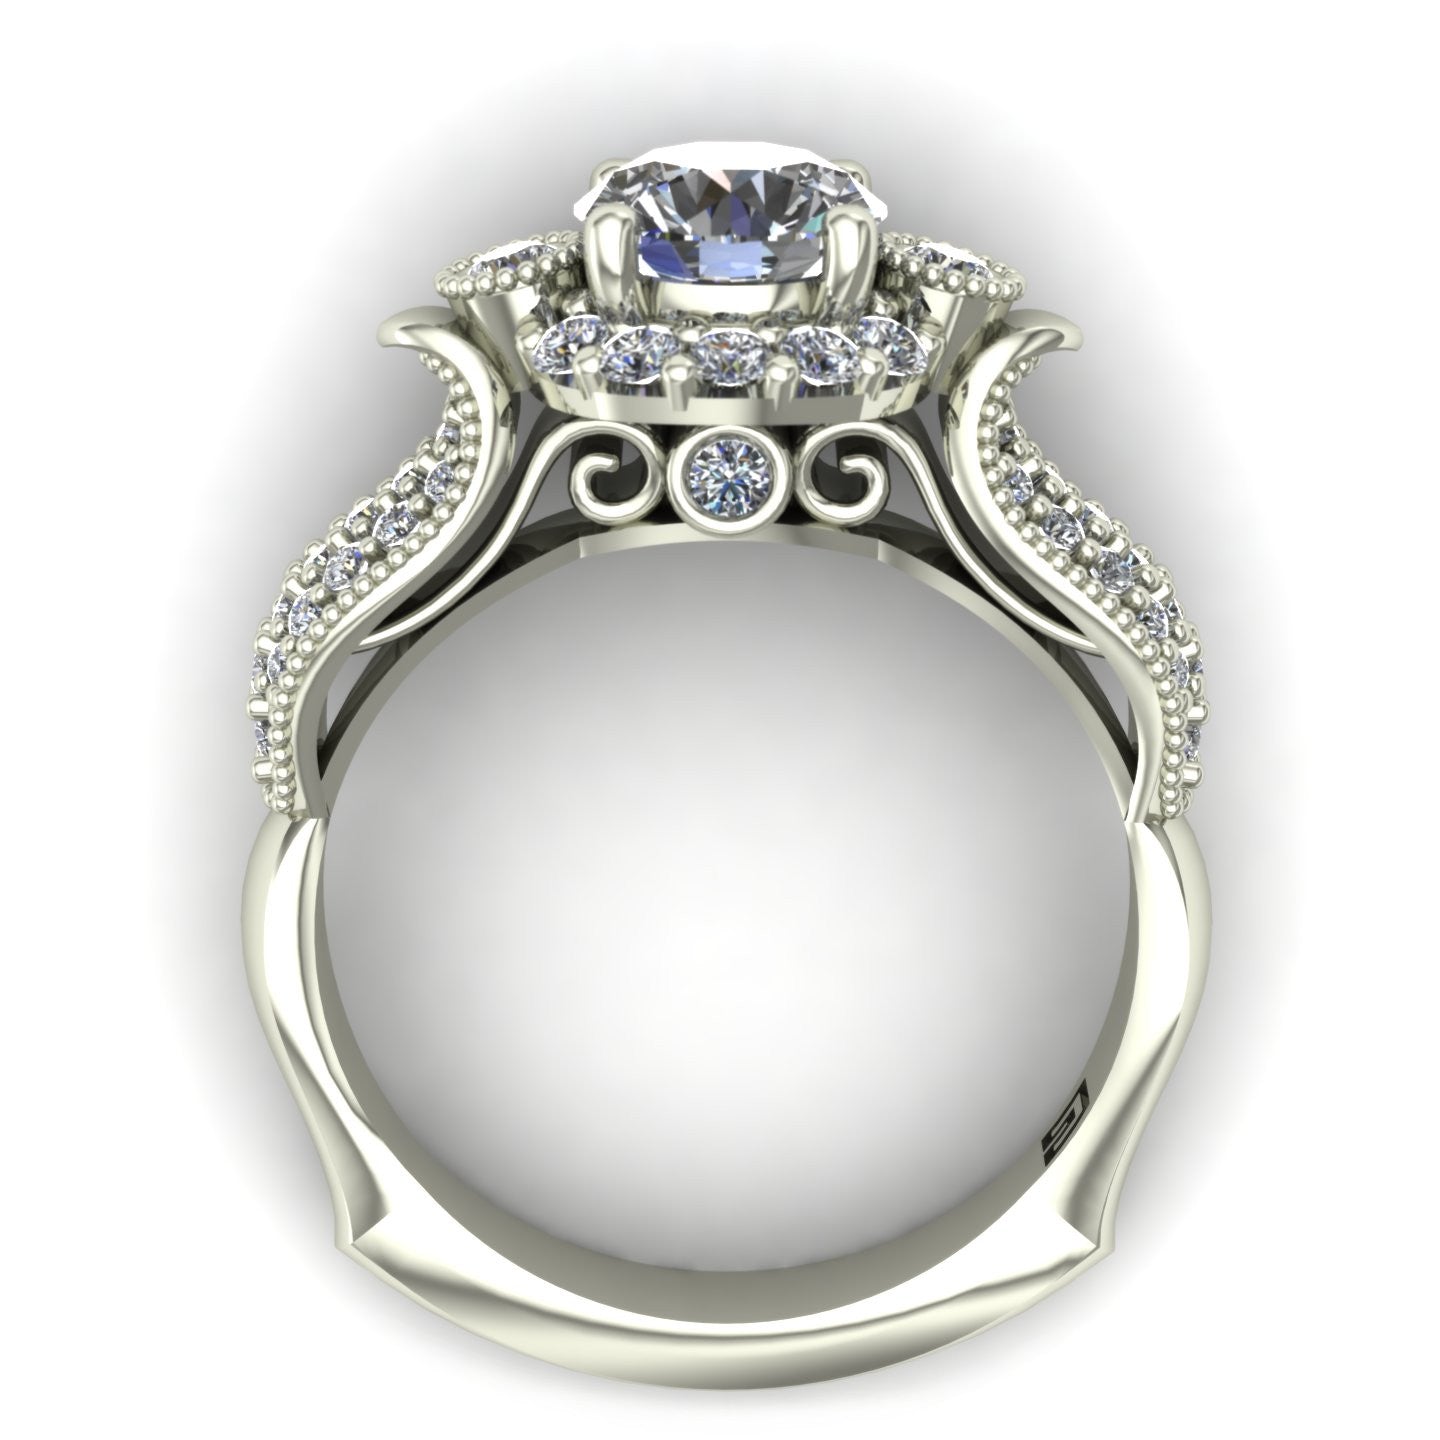 1ct diamond pavé engagement ring in 18k white gold - Charles Babb Designs - through finger view